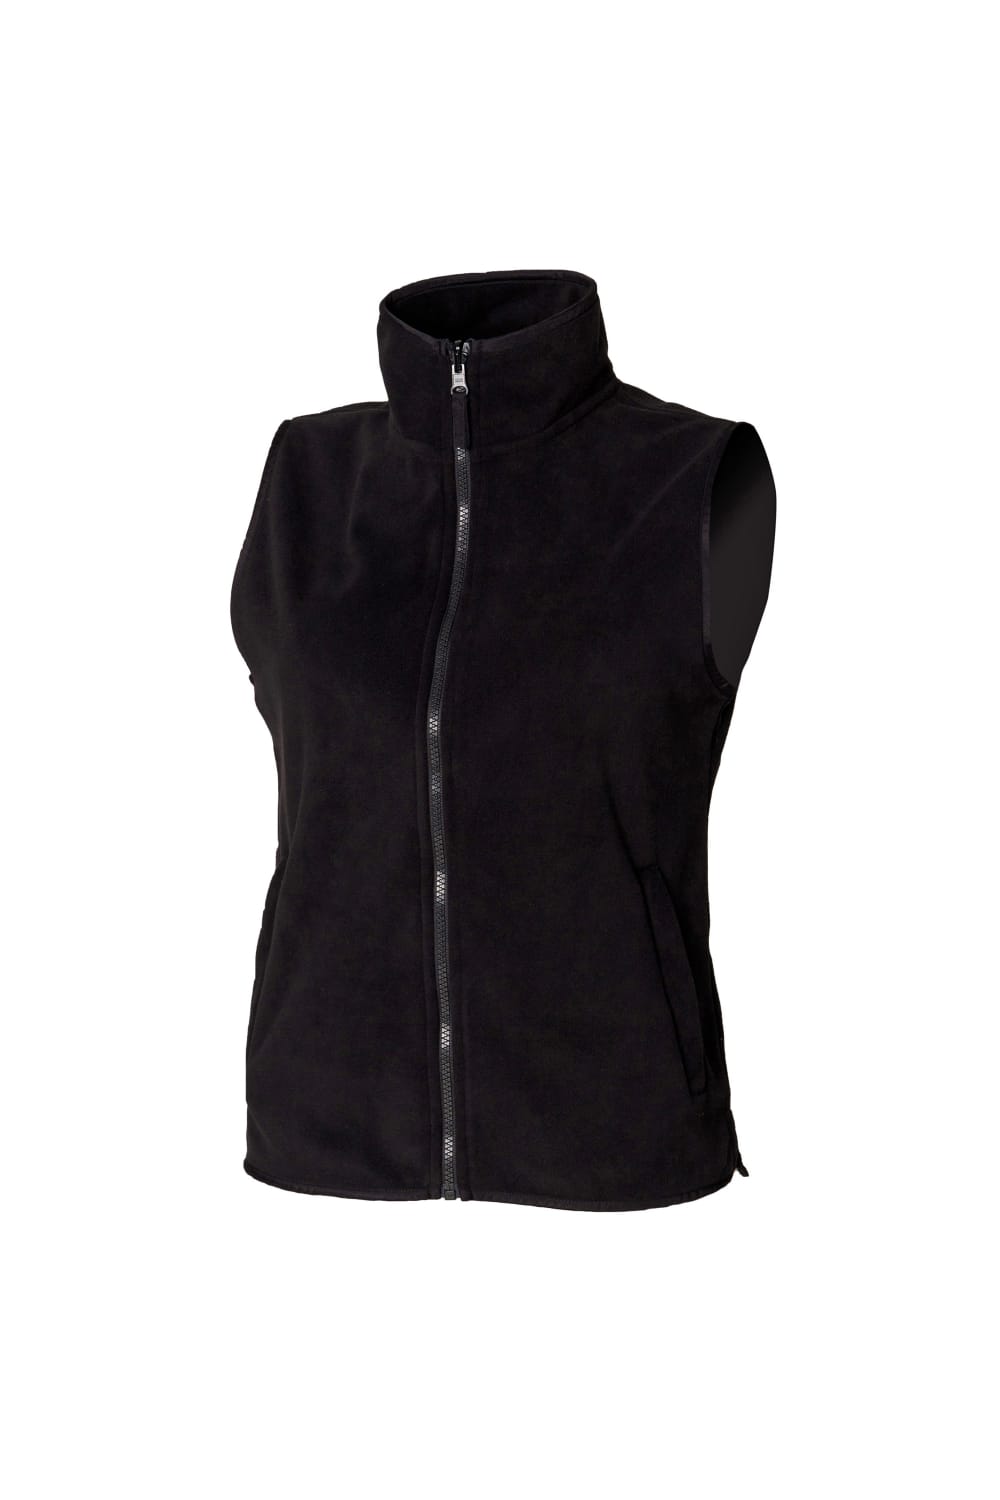 Henbury Ladies Microfleece Vest Jacket/Gilet/Bodywarmer (Black)